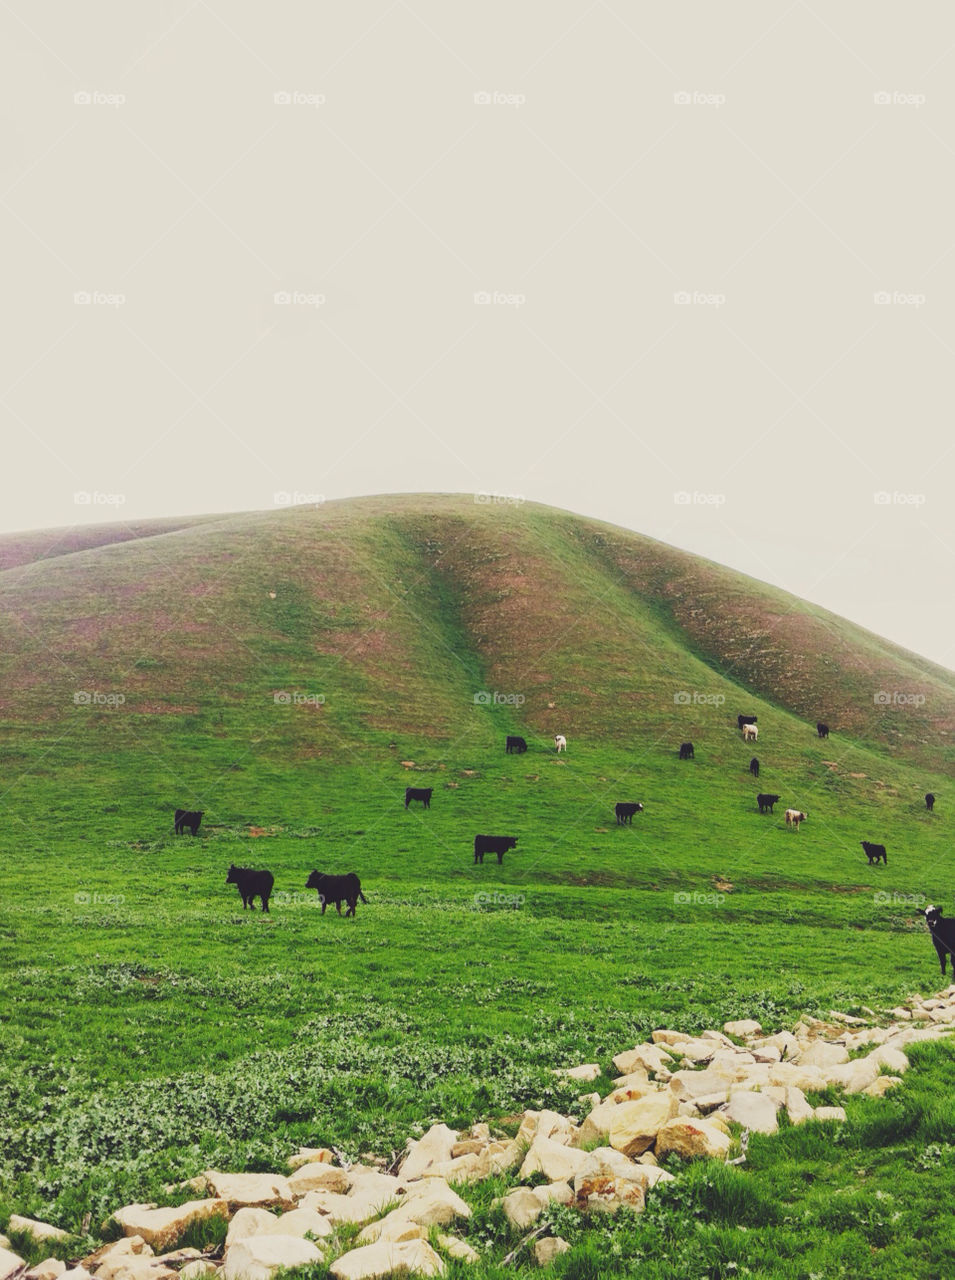 Several cows on a grassy hillside.